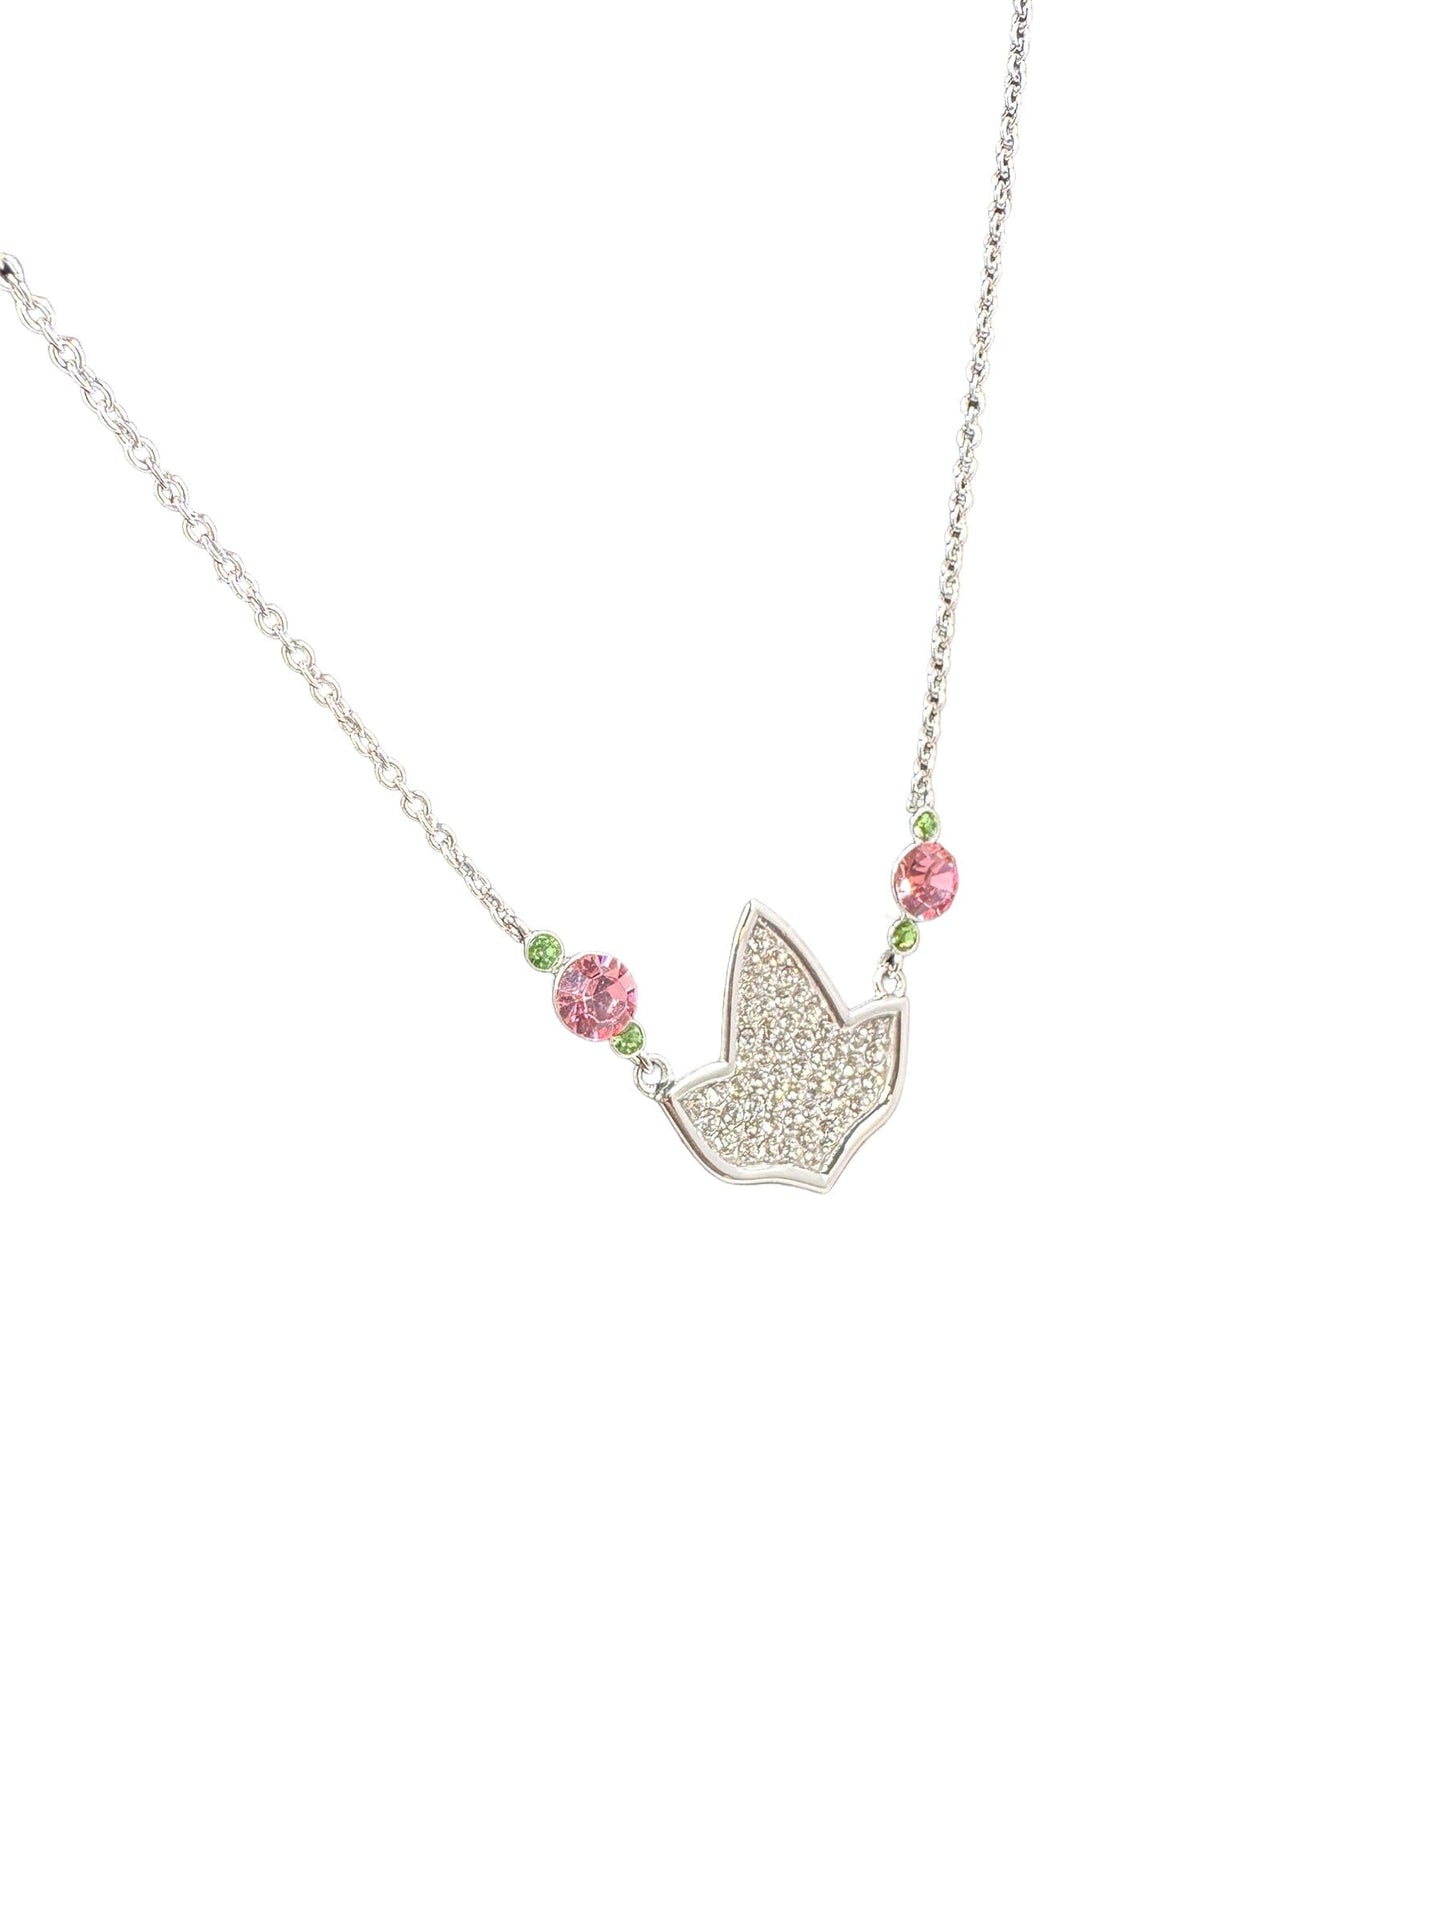 AKA Ivy Leaf Sterling Silver Gold Vermeil Necklace Necklaces Trendzio Jewelry 